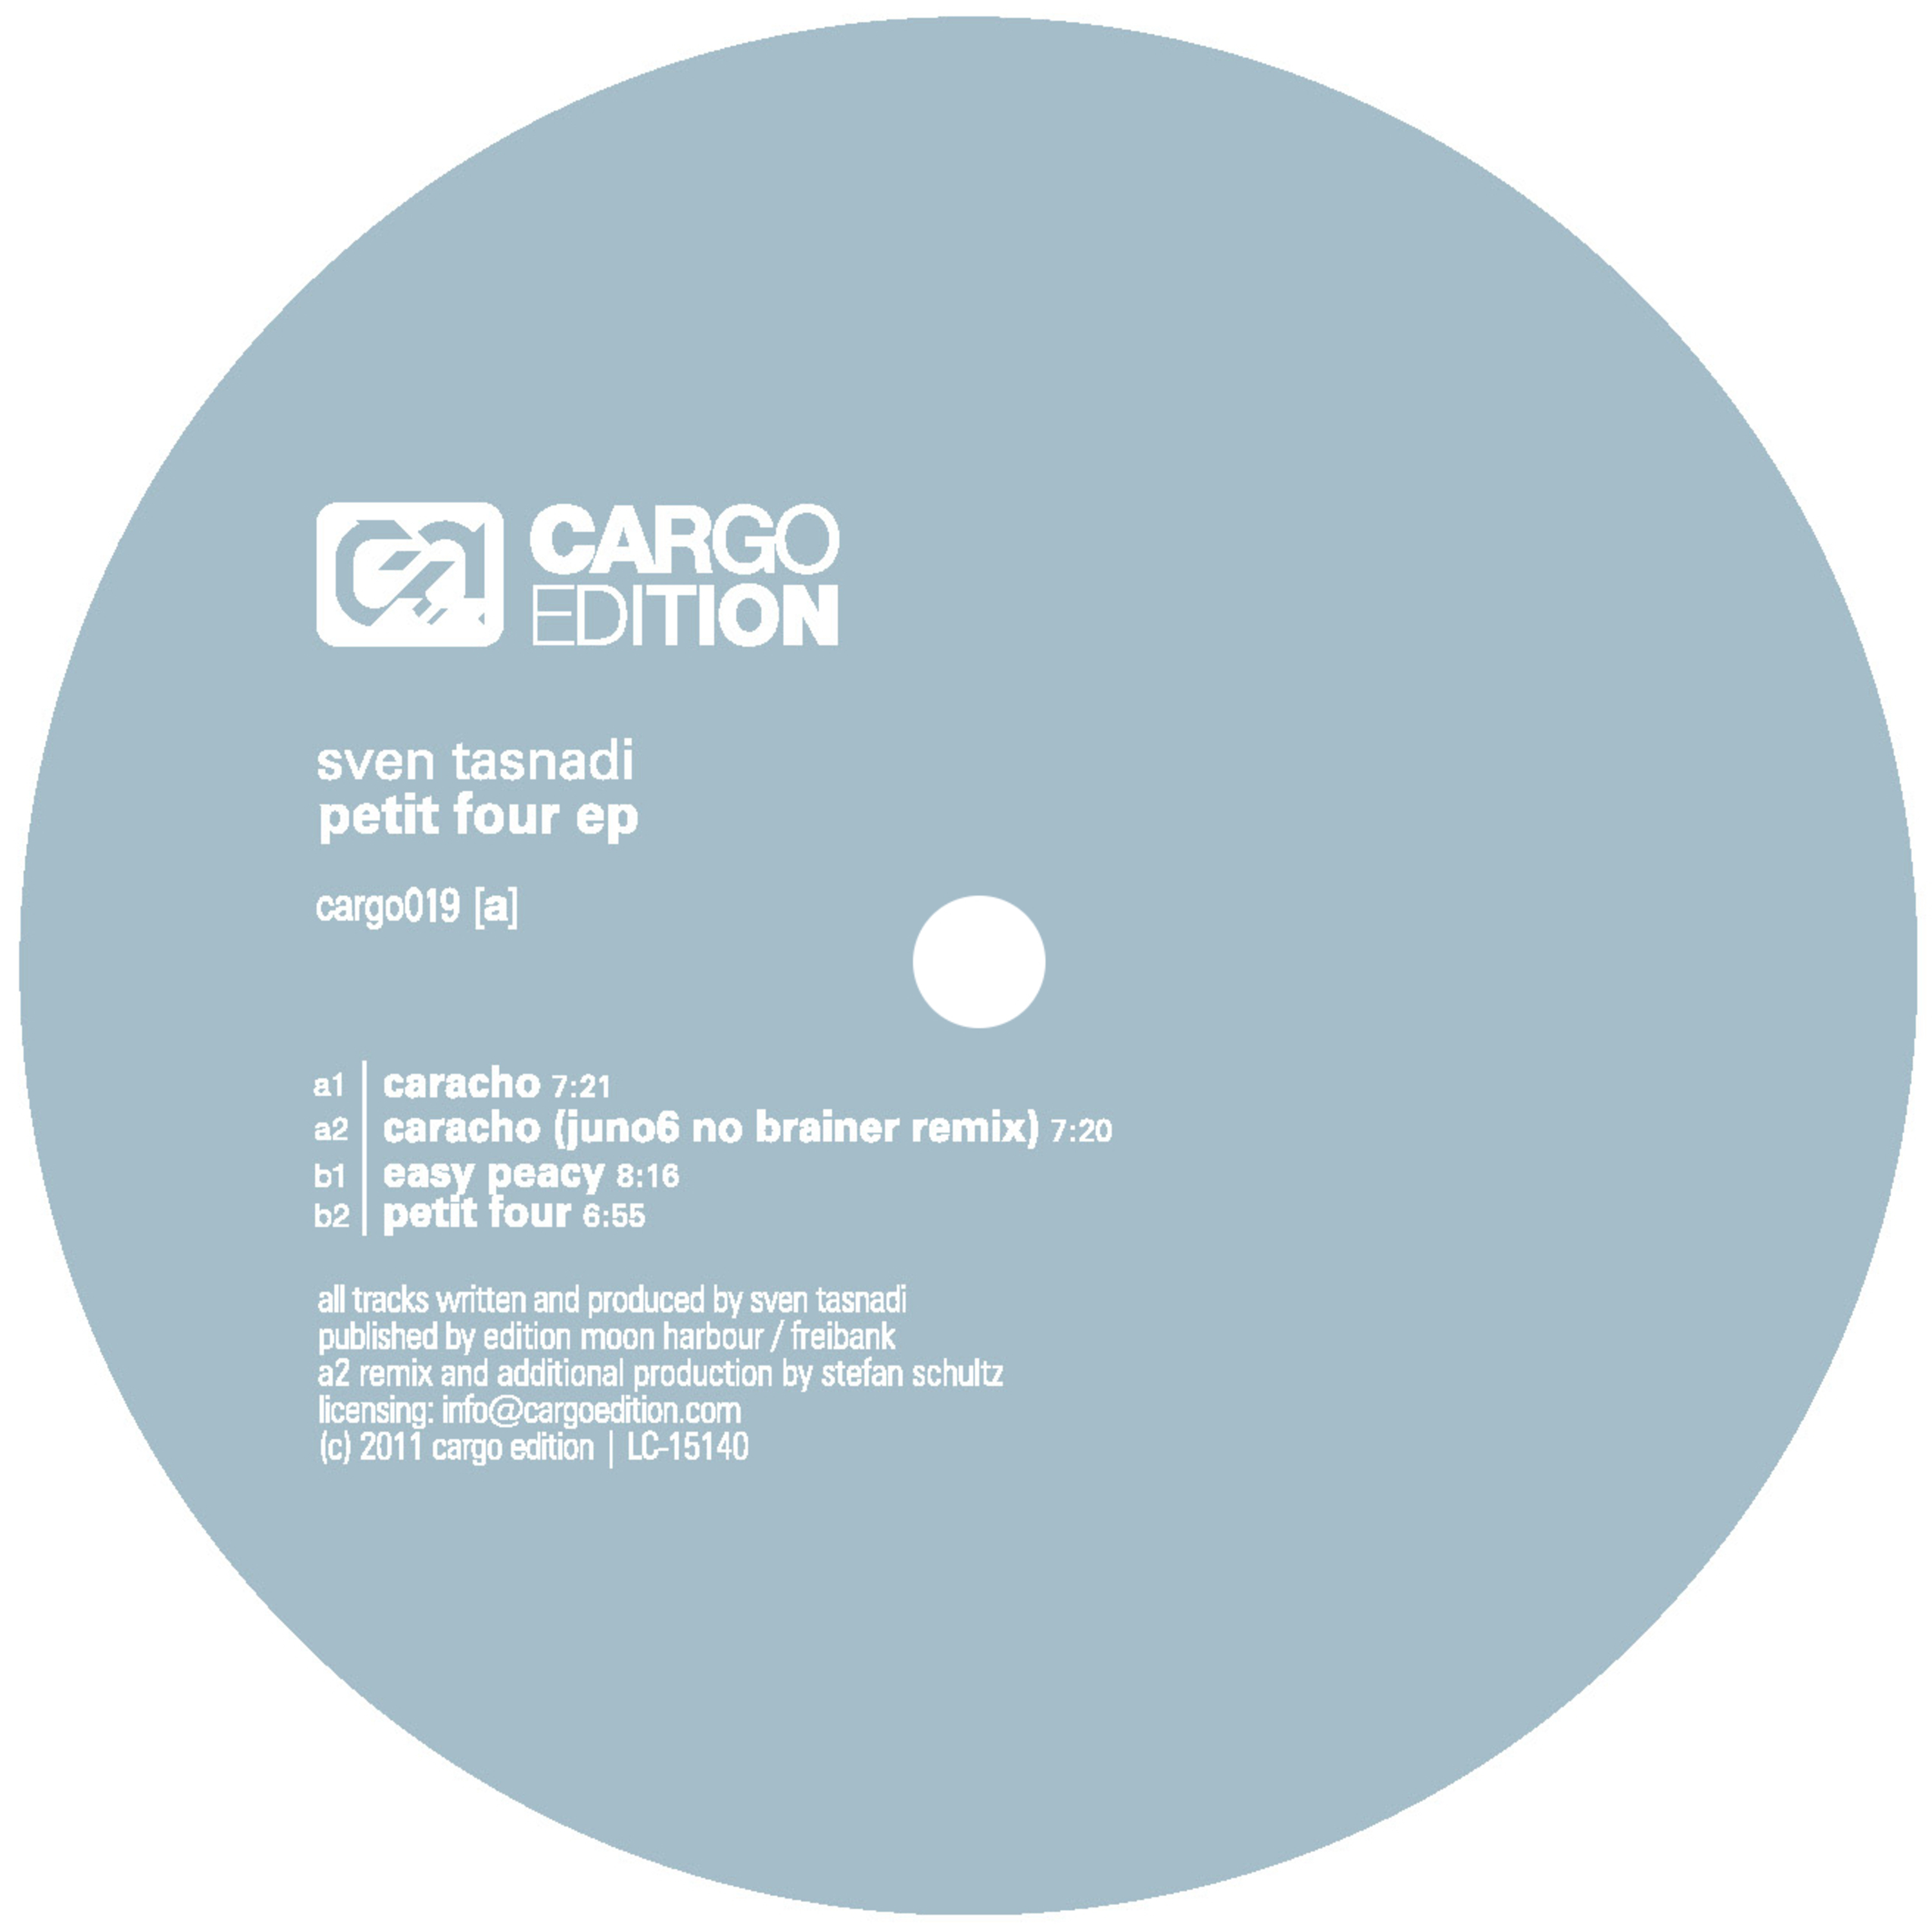 Caracho (Juno6 No Brainer Remix)